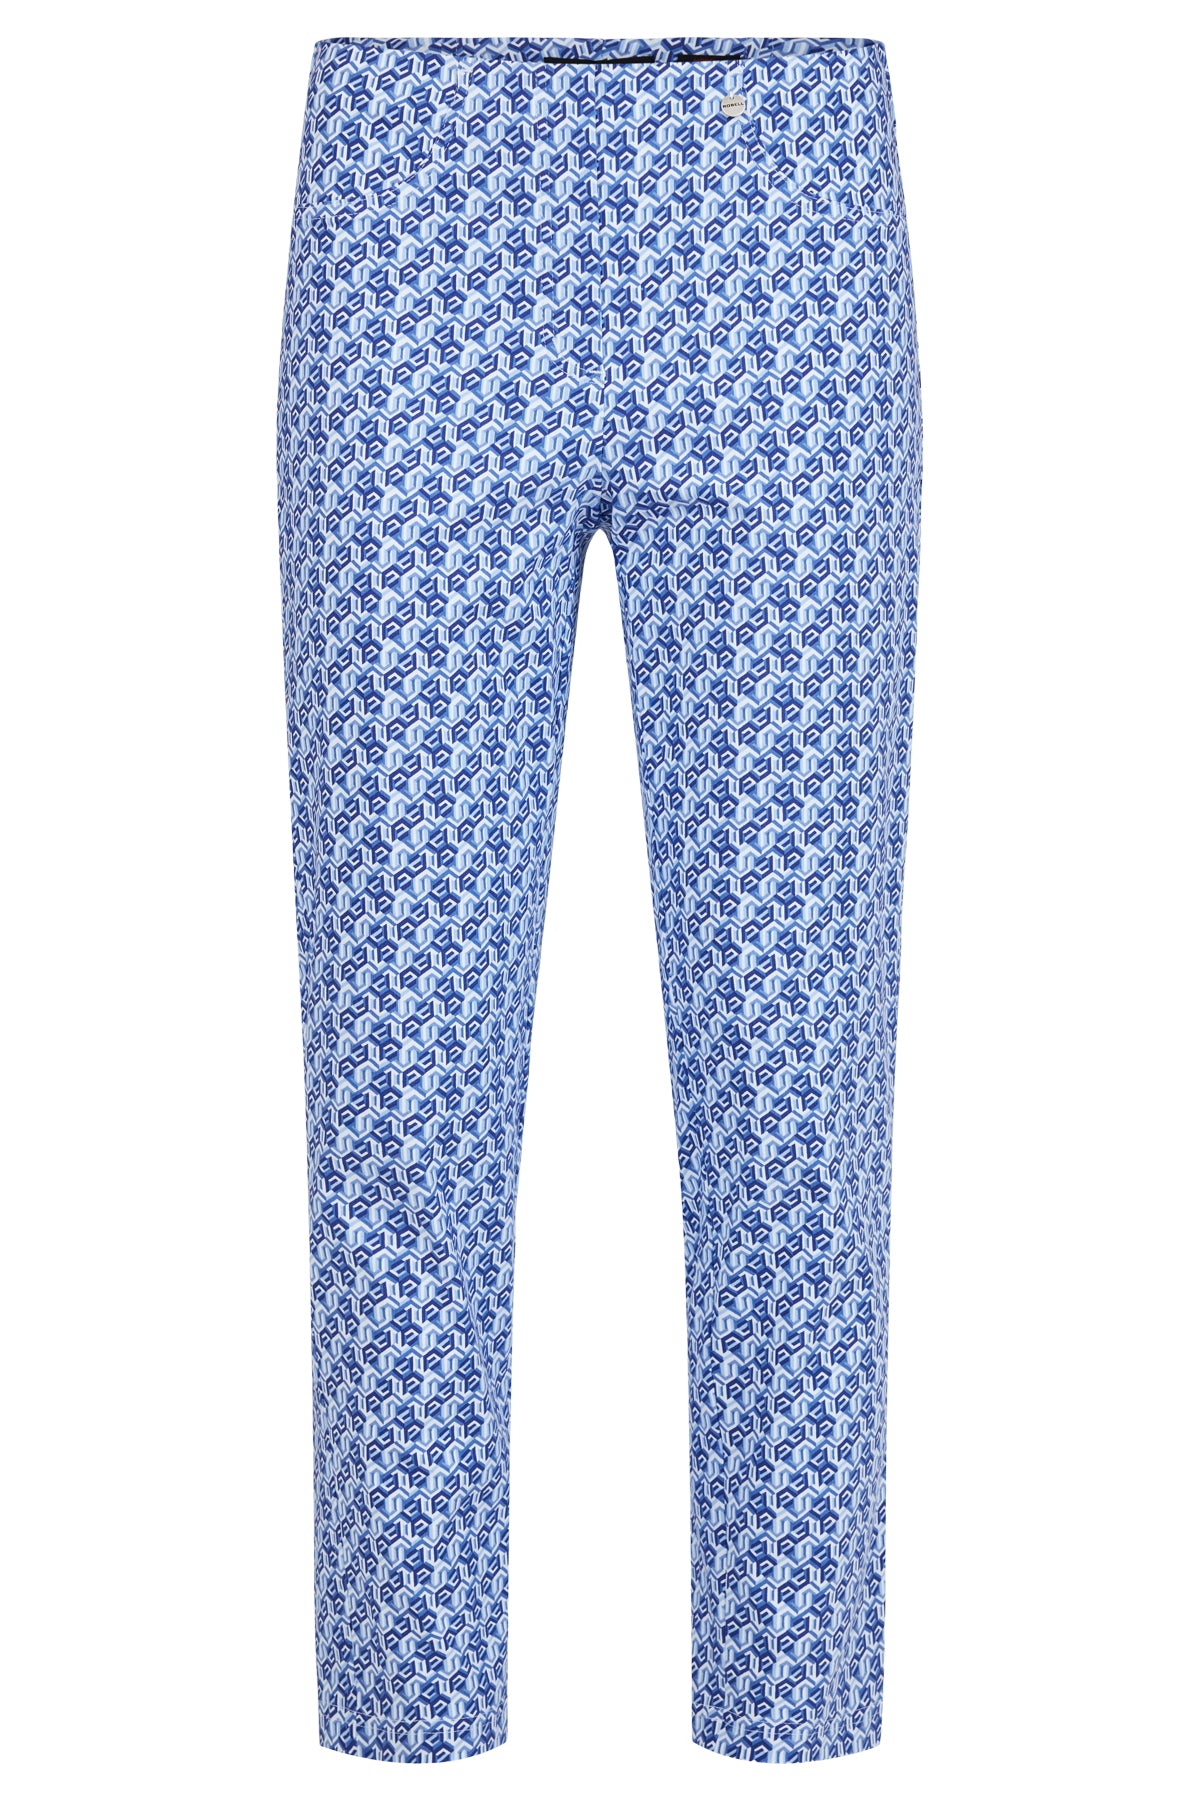 Blue and White Geometric Print Full Length Bella Jeans